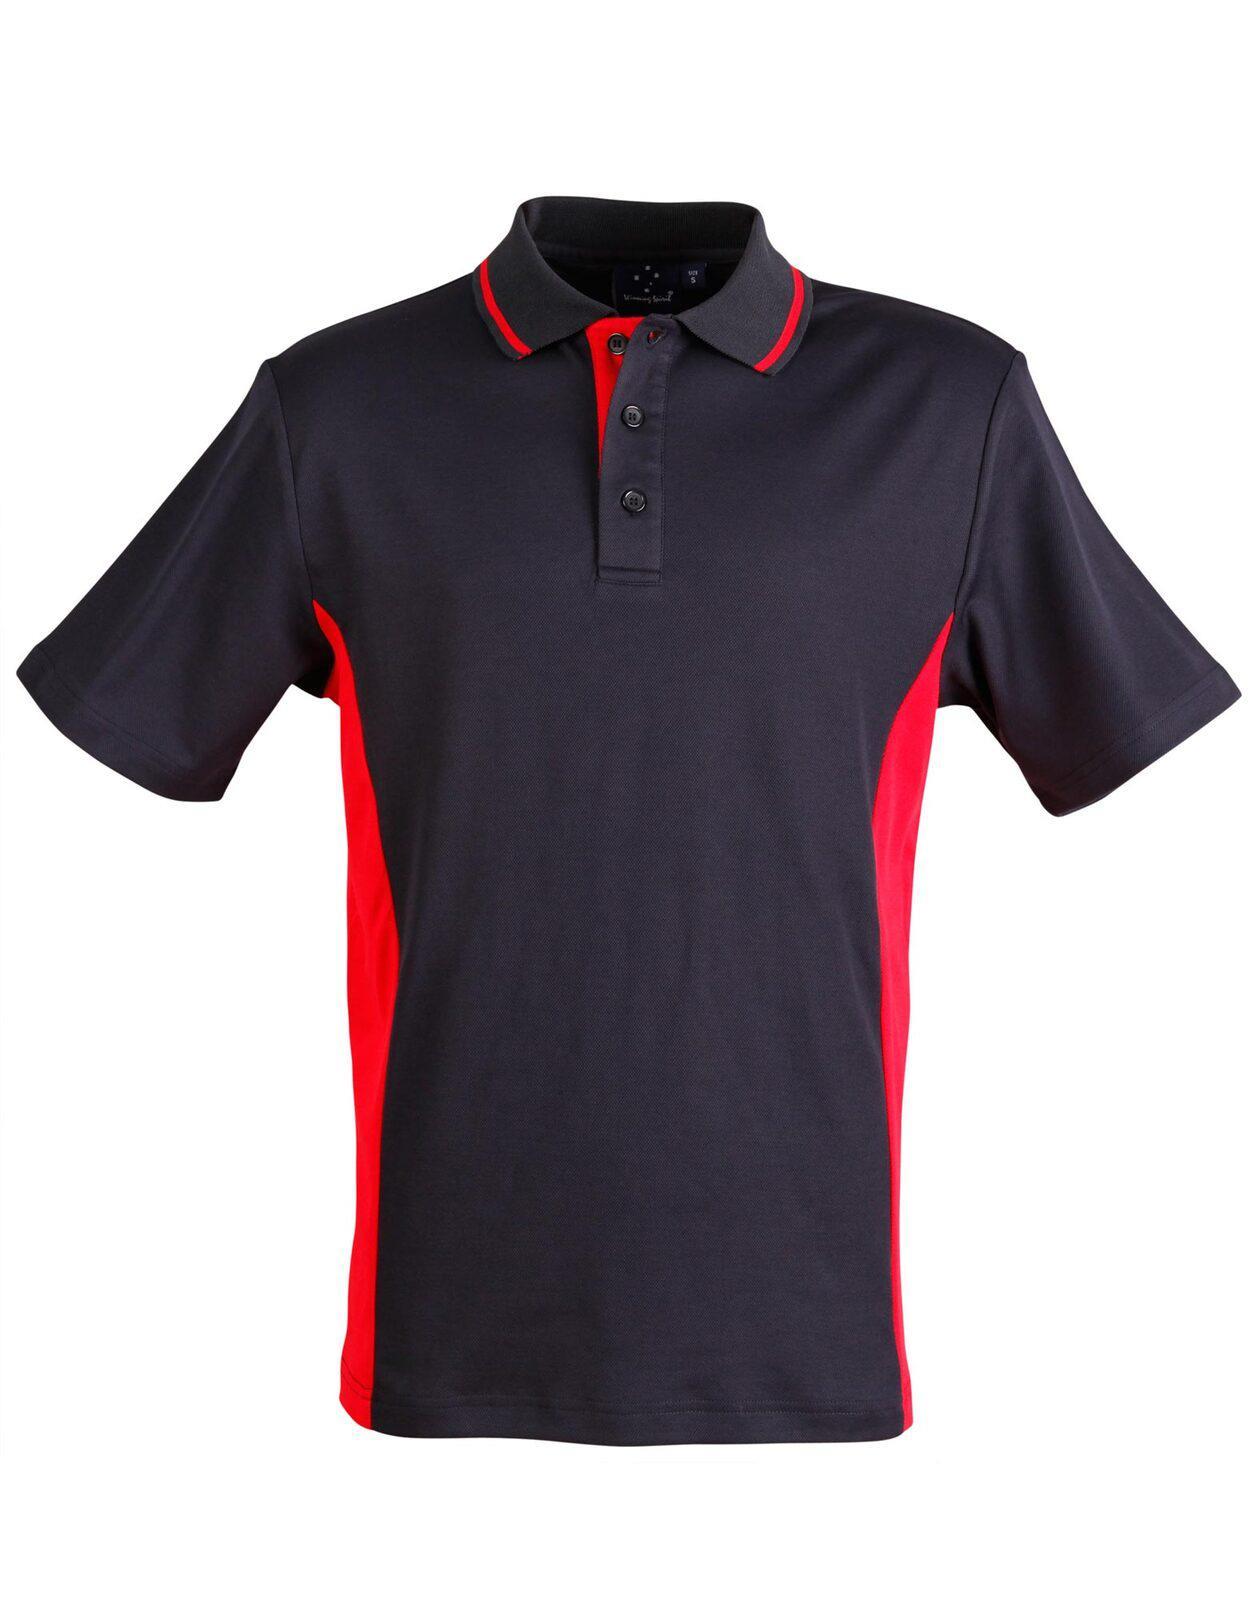 PS73K Sz 06K TEAMMATE Cotton Polyester Kids Polo Shirt Navy/Red